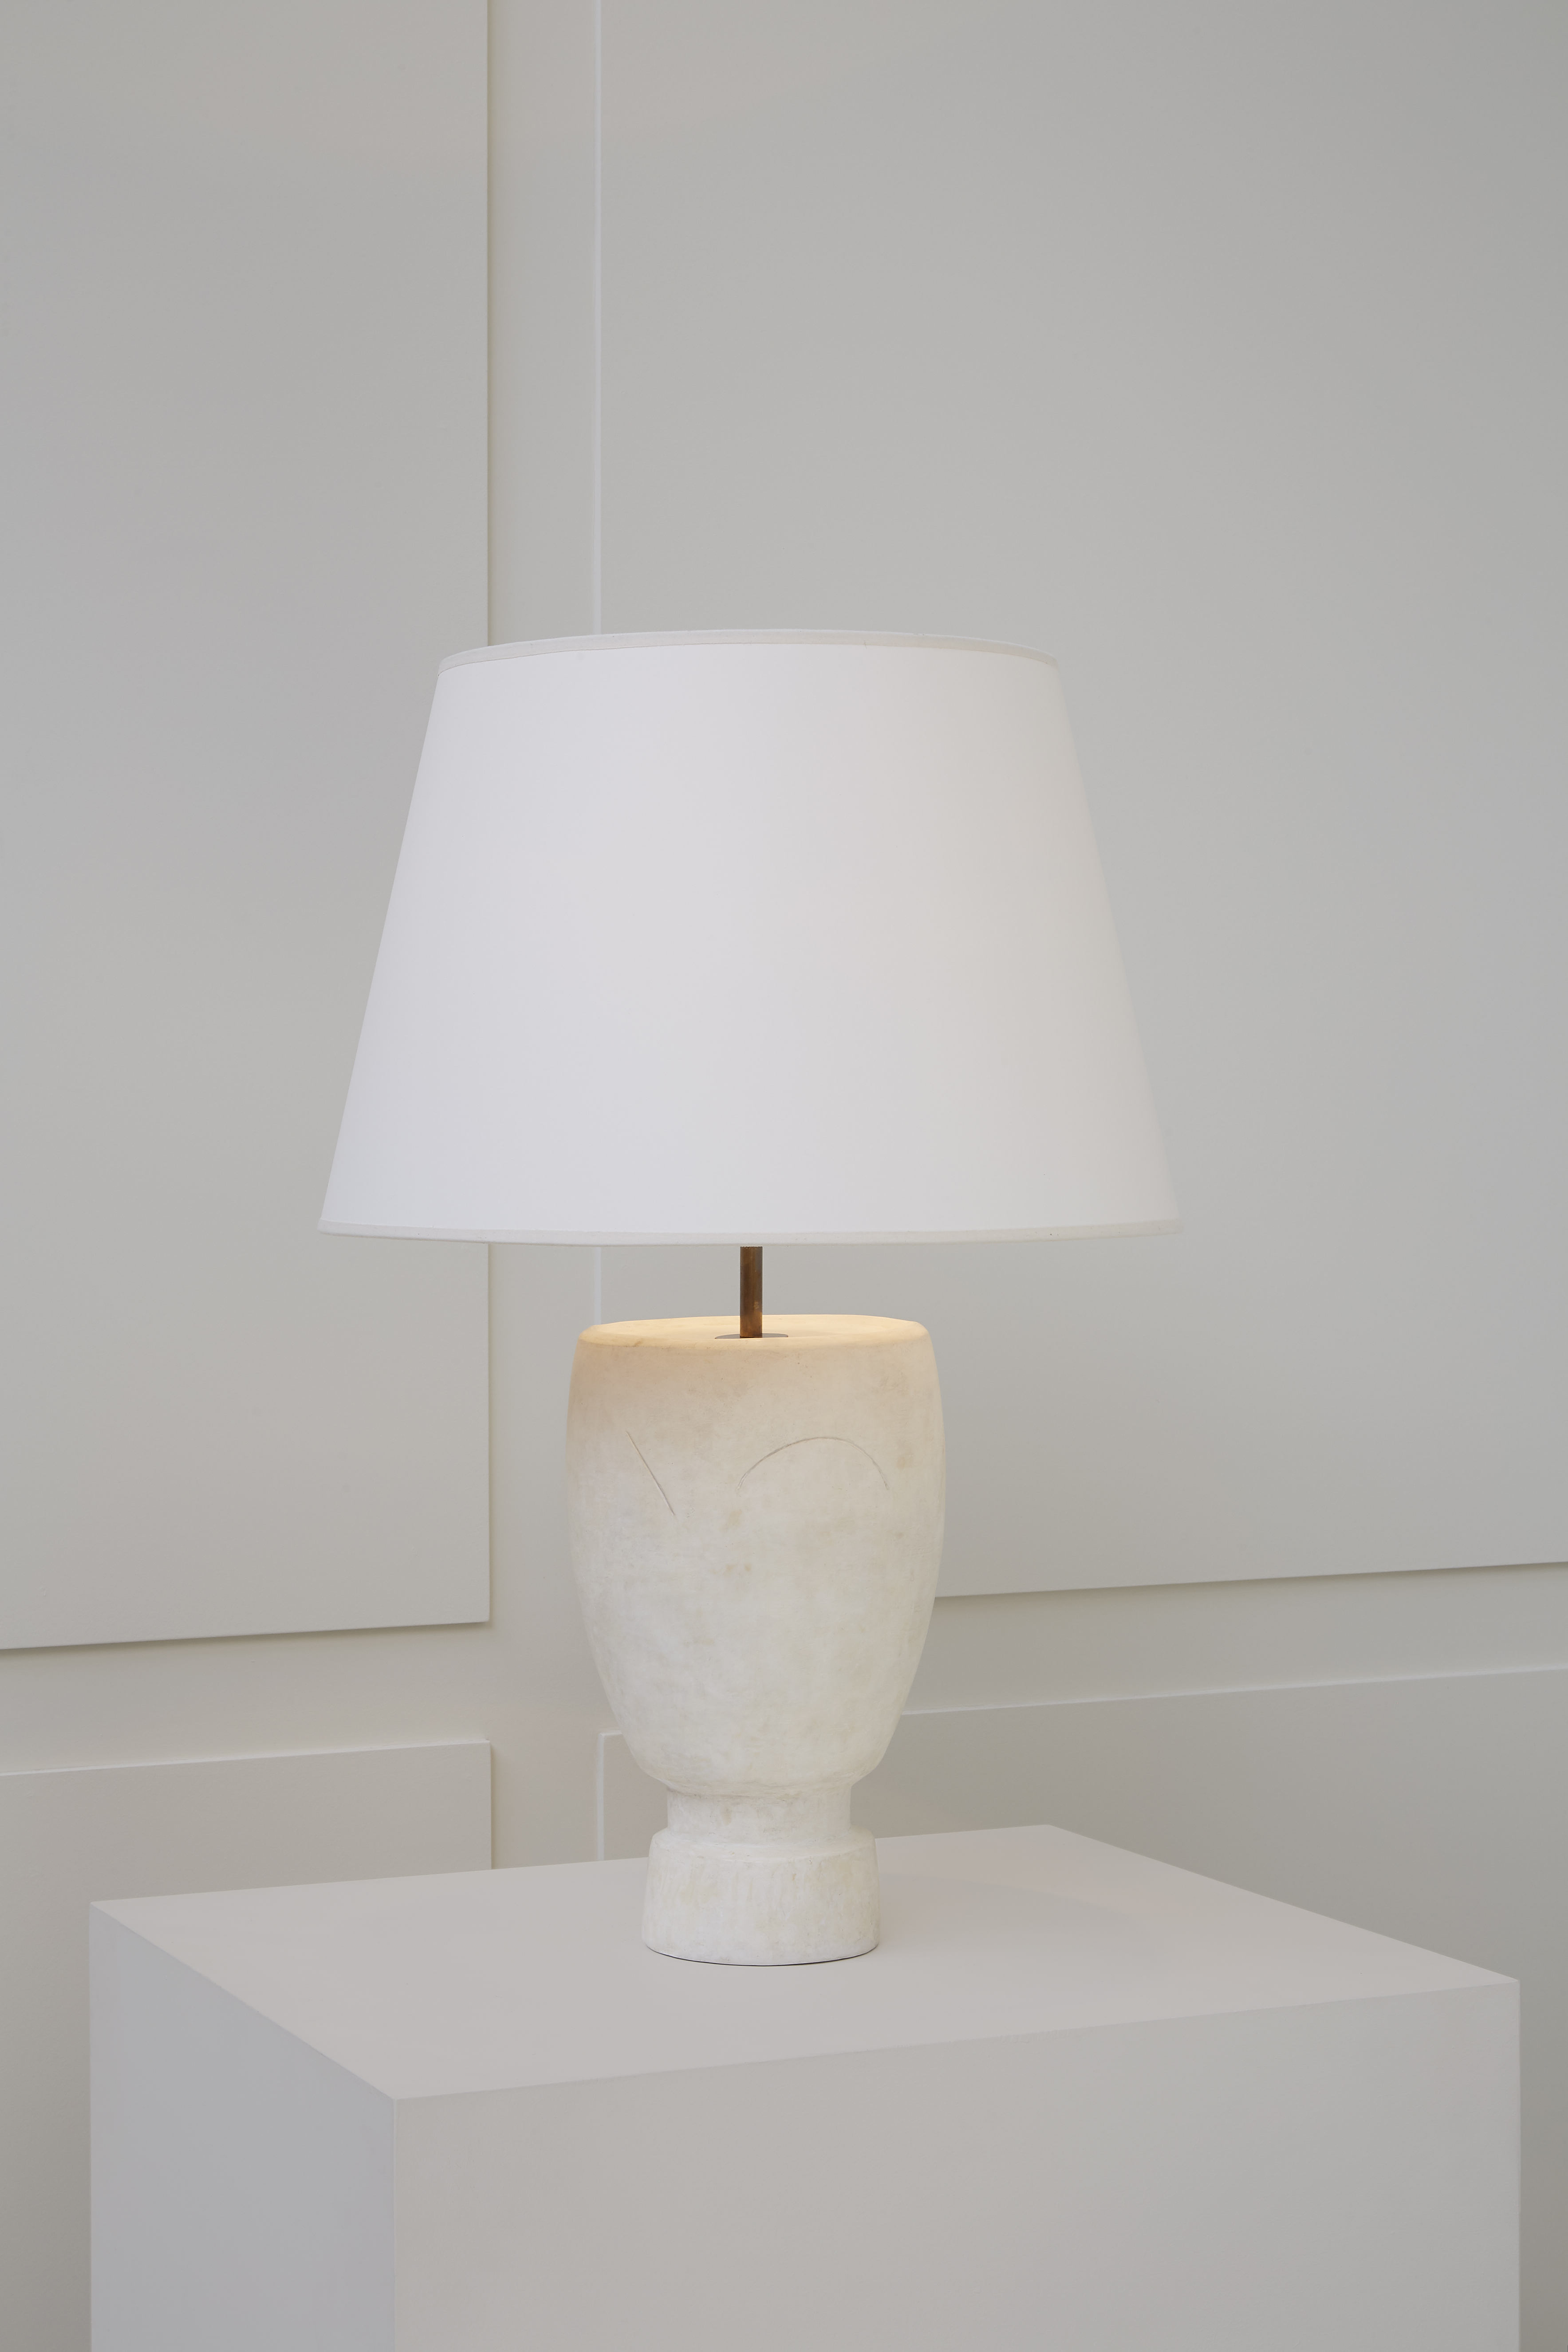 Alberto Giacometti, Lampe, modèle ovale incisé, vue 02